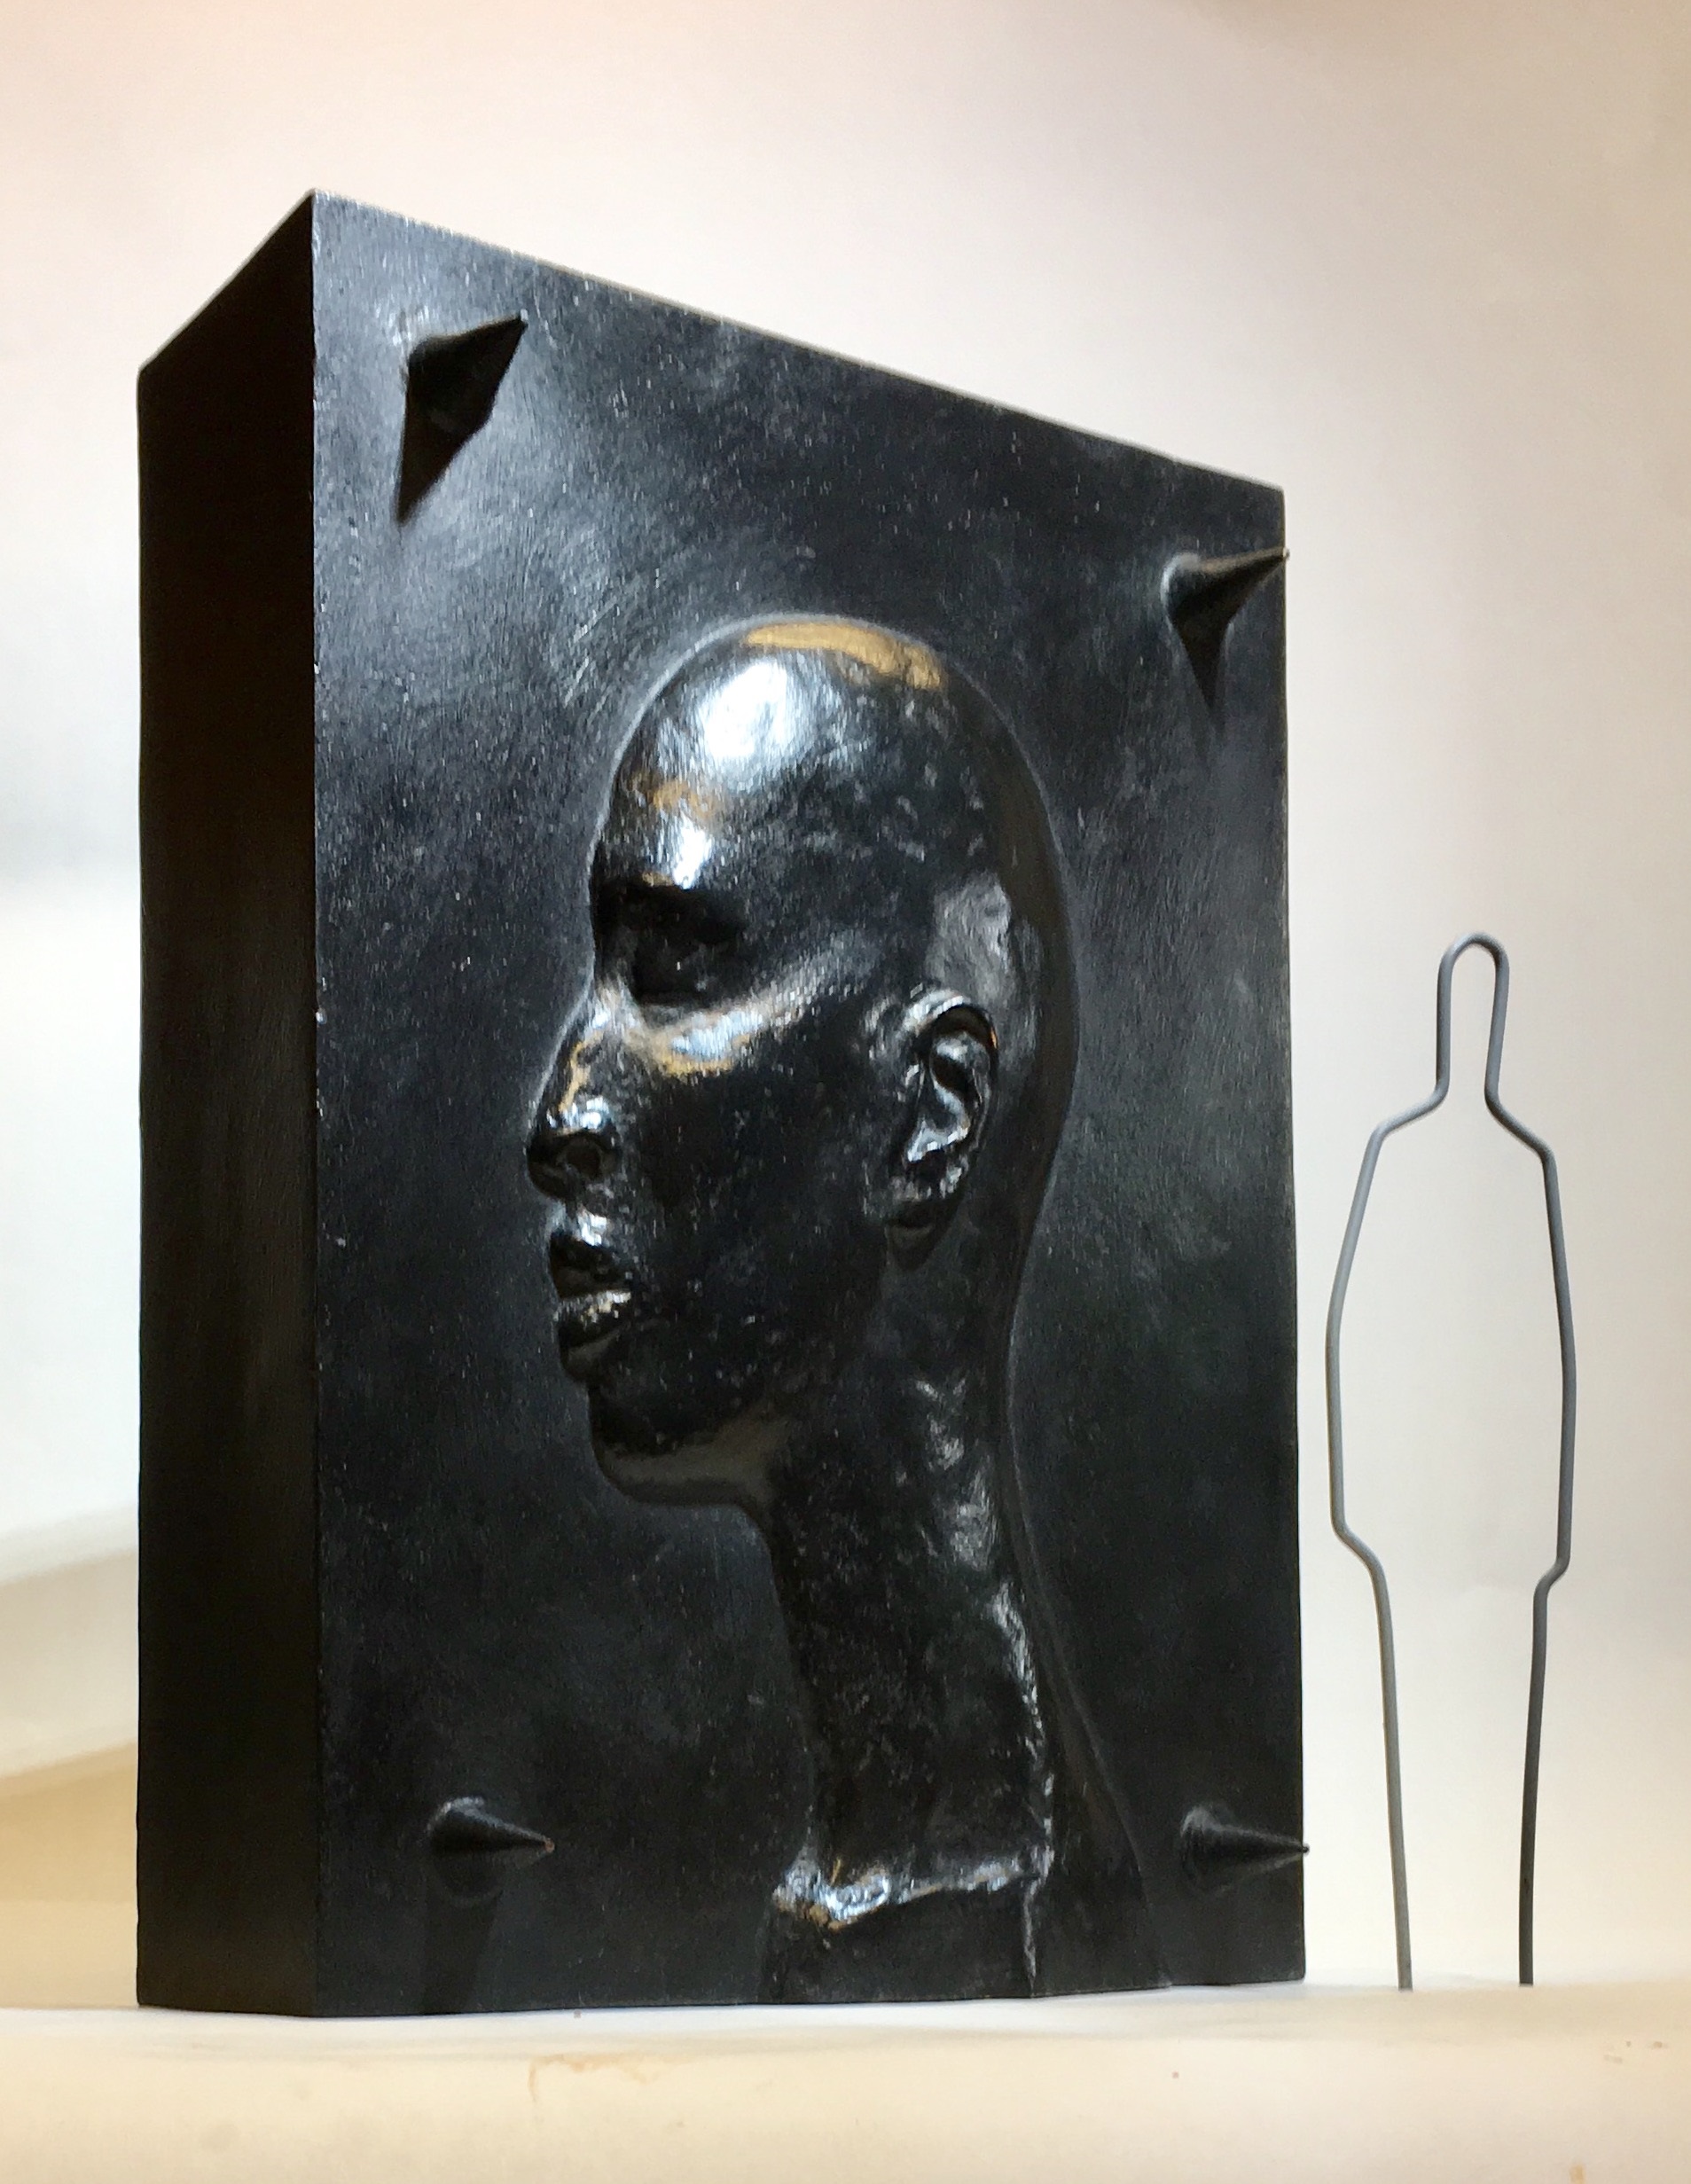 Black Lives Matter sculpture proposal by Vincent Gray